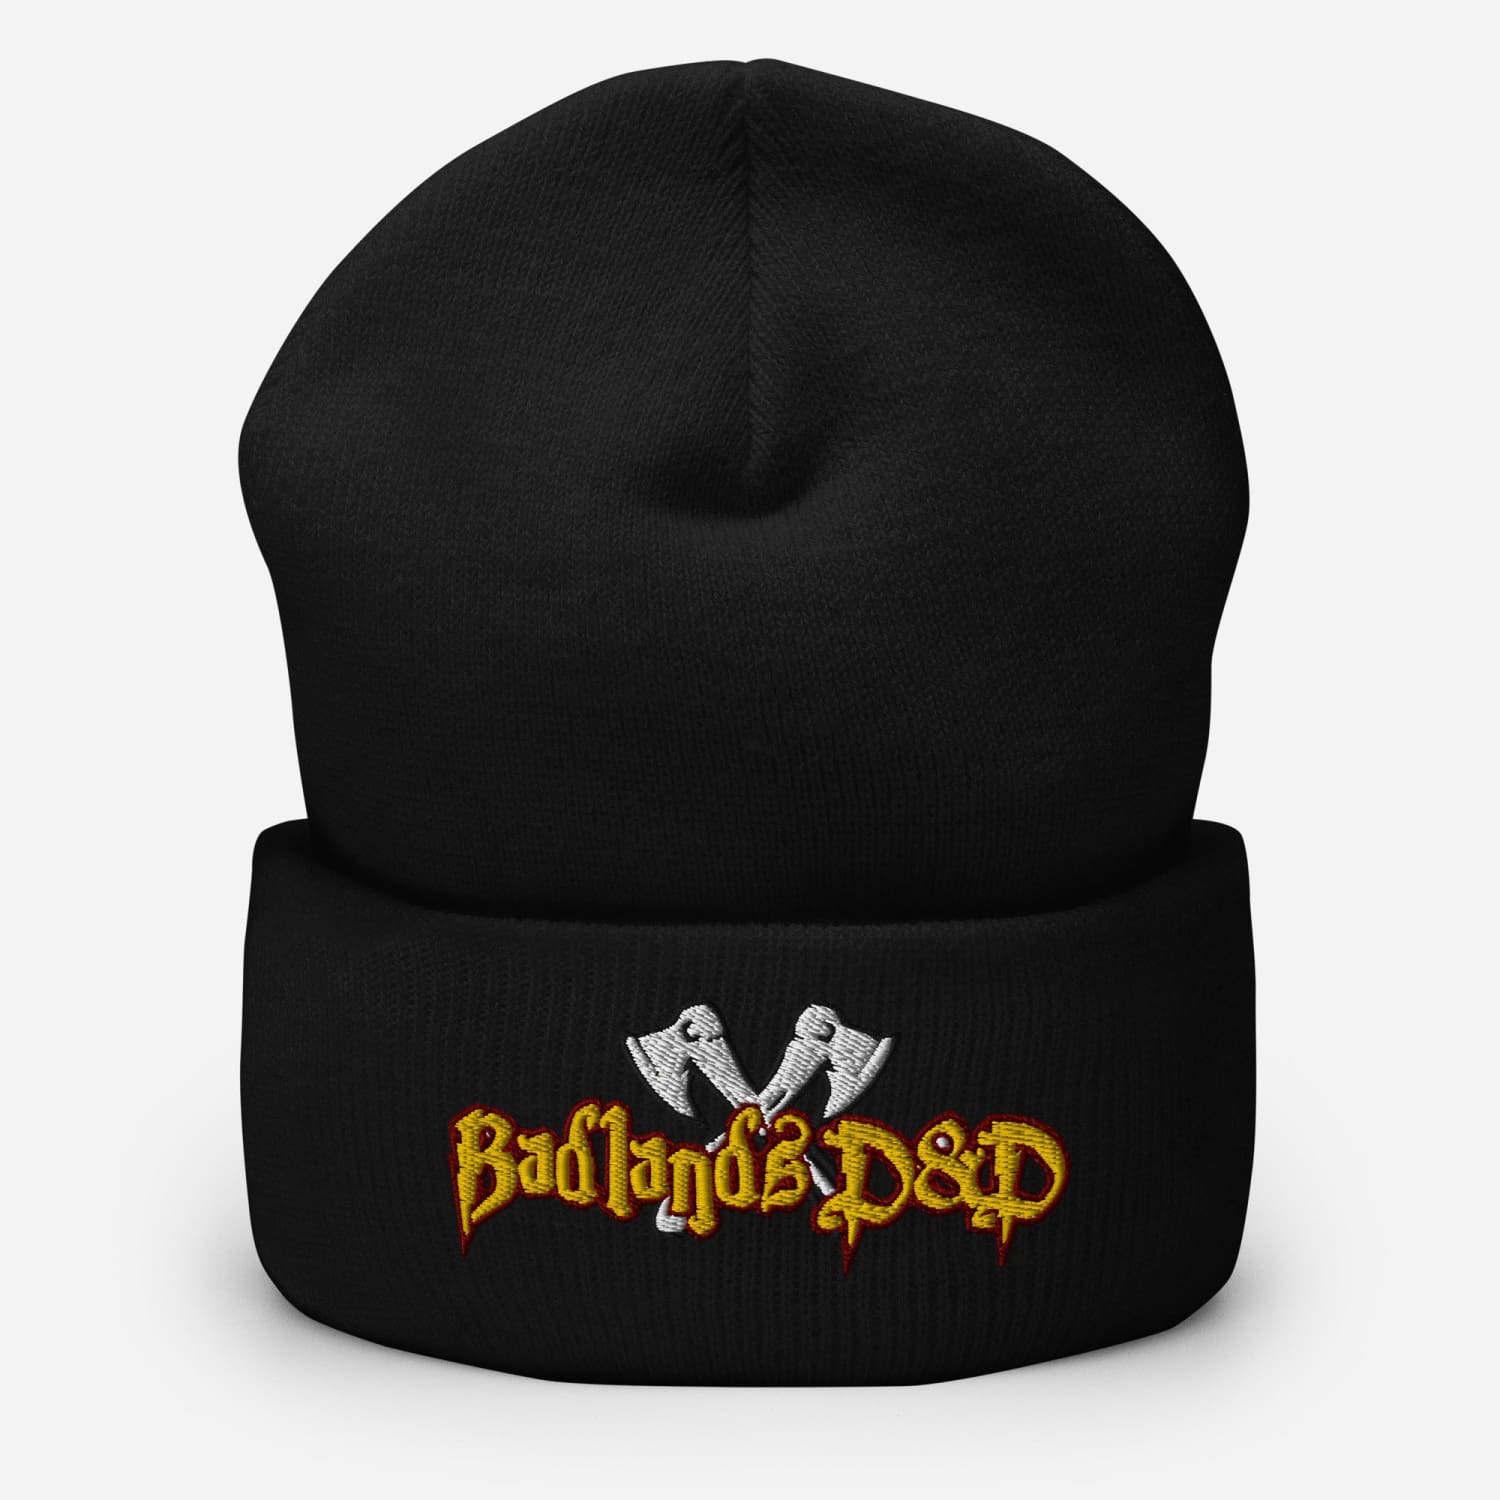 Badlands D&D Logo Cuffed Knit Beanie / Tuque - Black